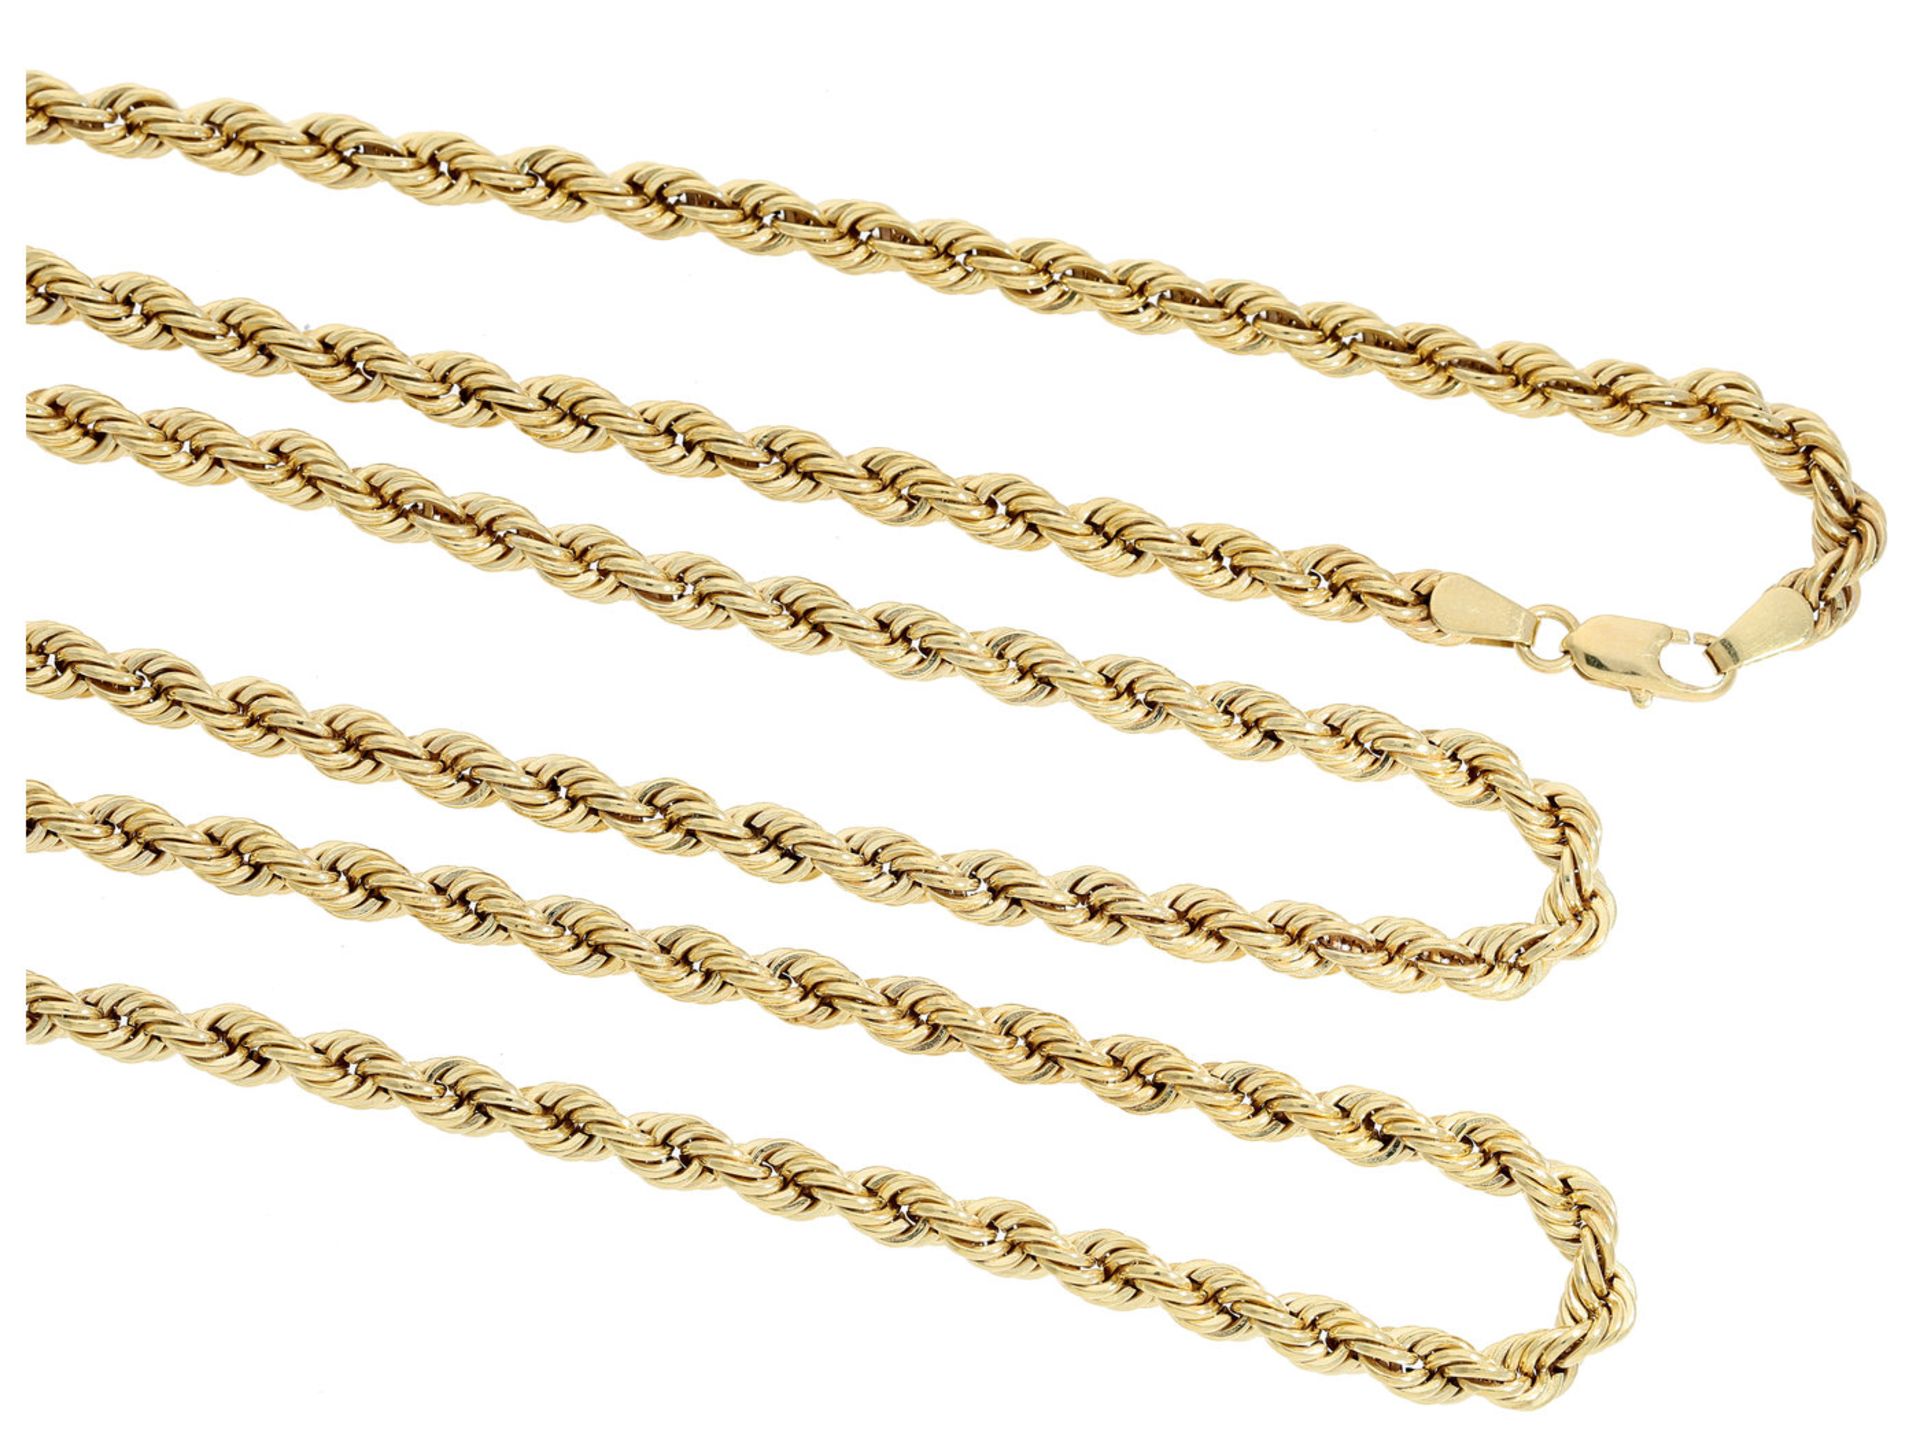 Kette/Collier: neuwertige Goldkette in dekorativem ZopfmusterCa. 88cm lang, ca. 14,5g, 8K